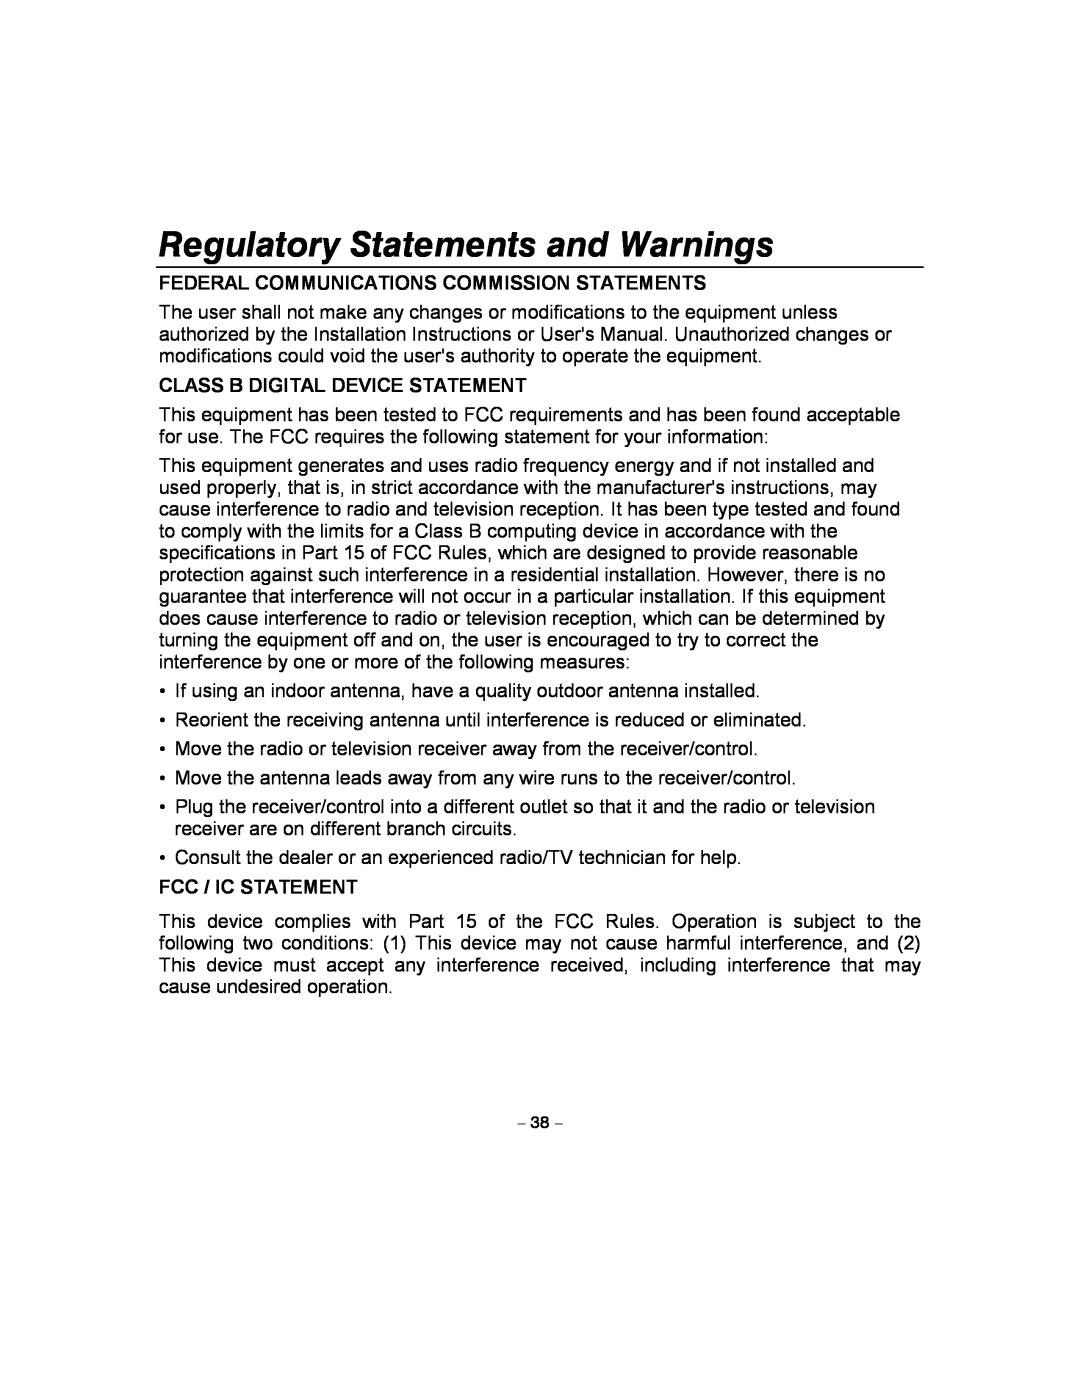 Honeywell 4110XM manual Regulatory Statements and Warnings 